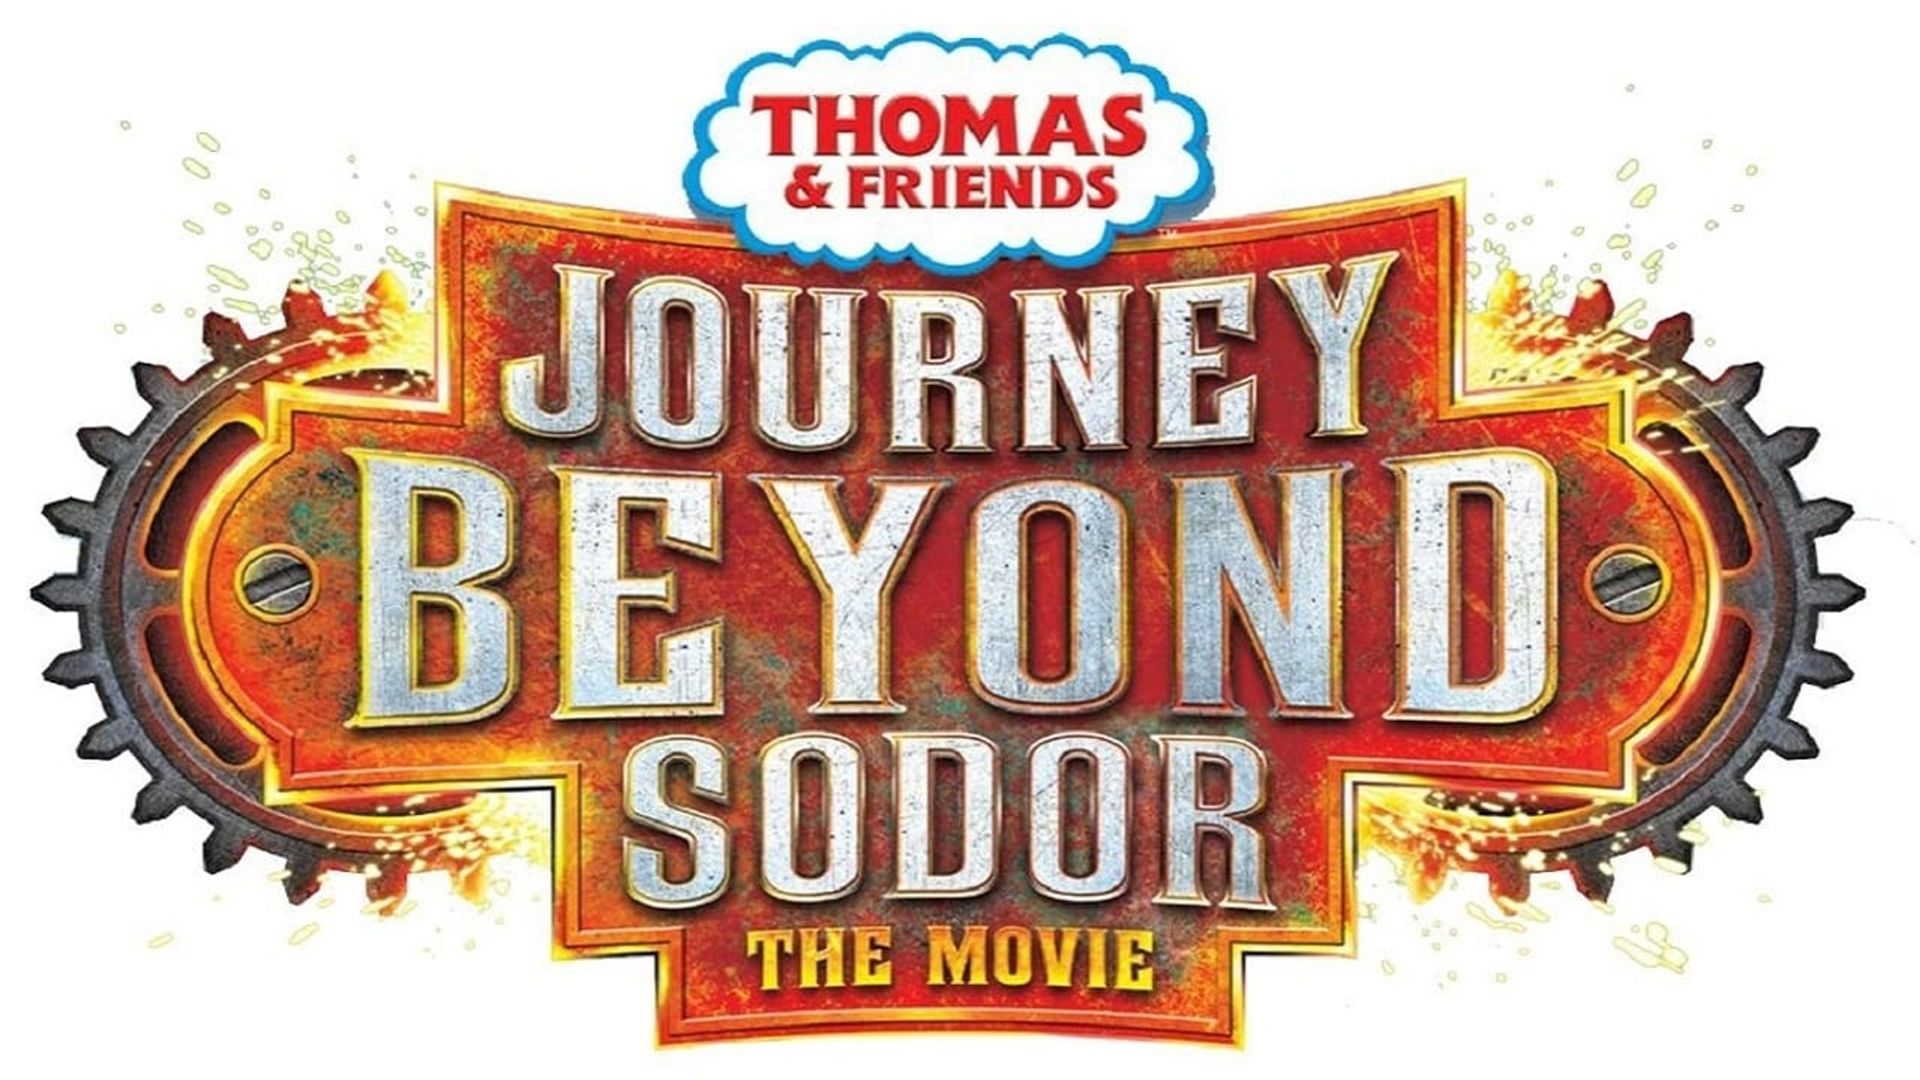 Thomas & Friends: Journey Beyond Sodor background